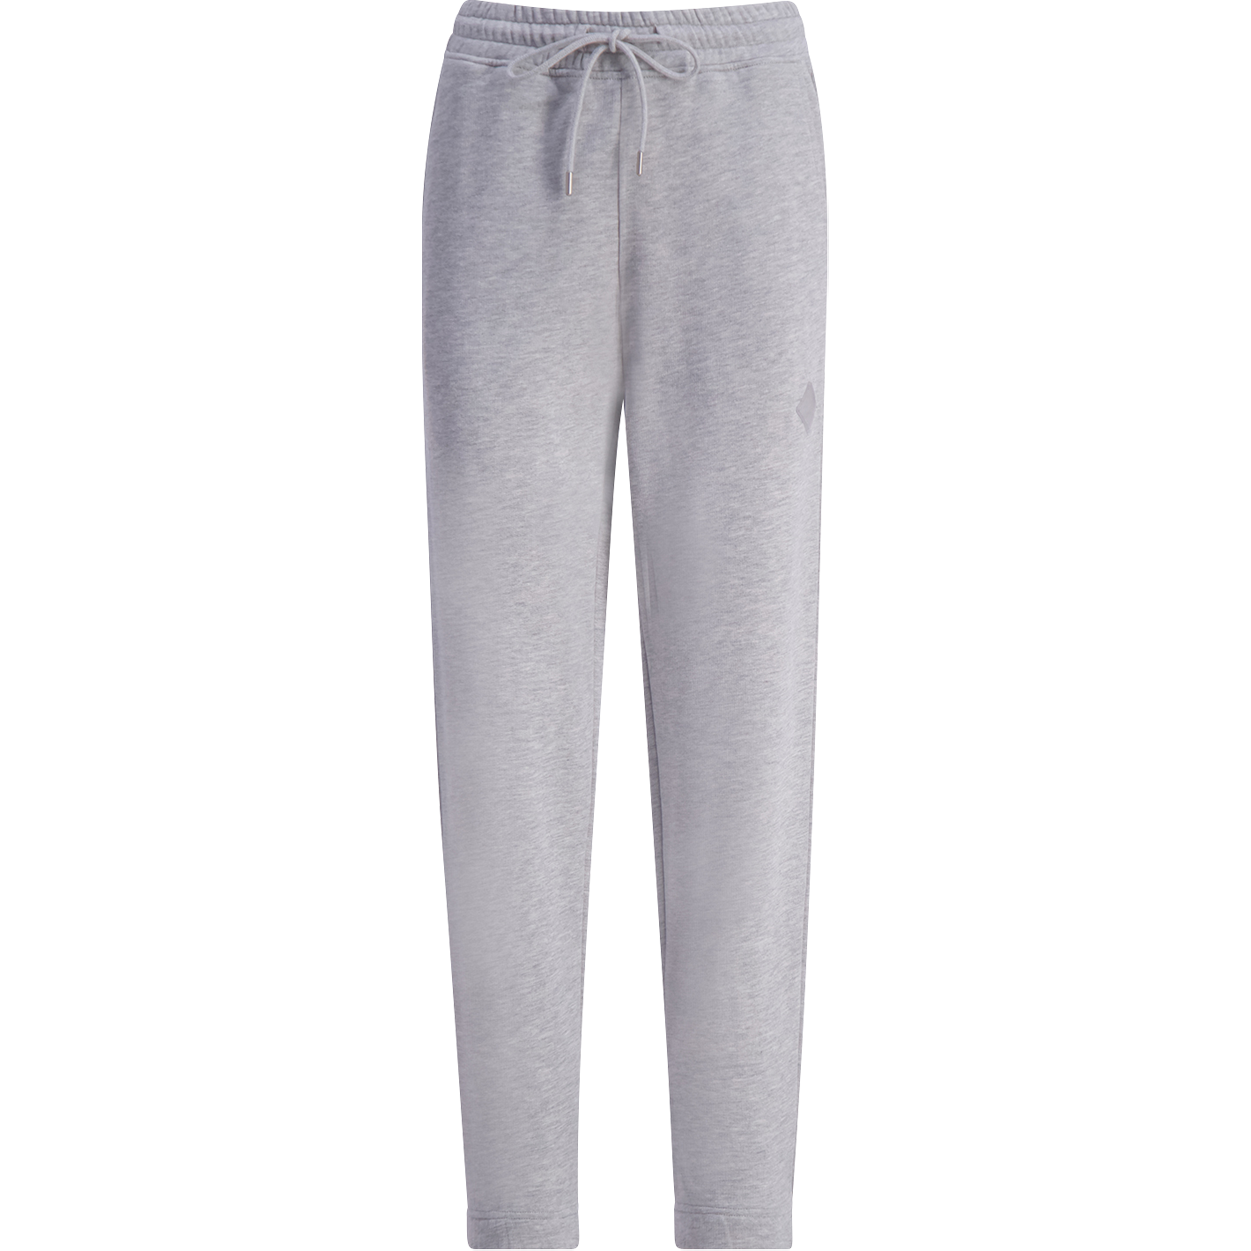 Hanger Trousers Grey